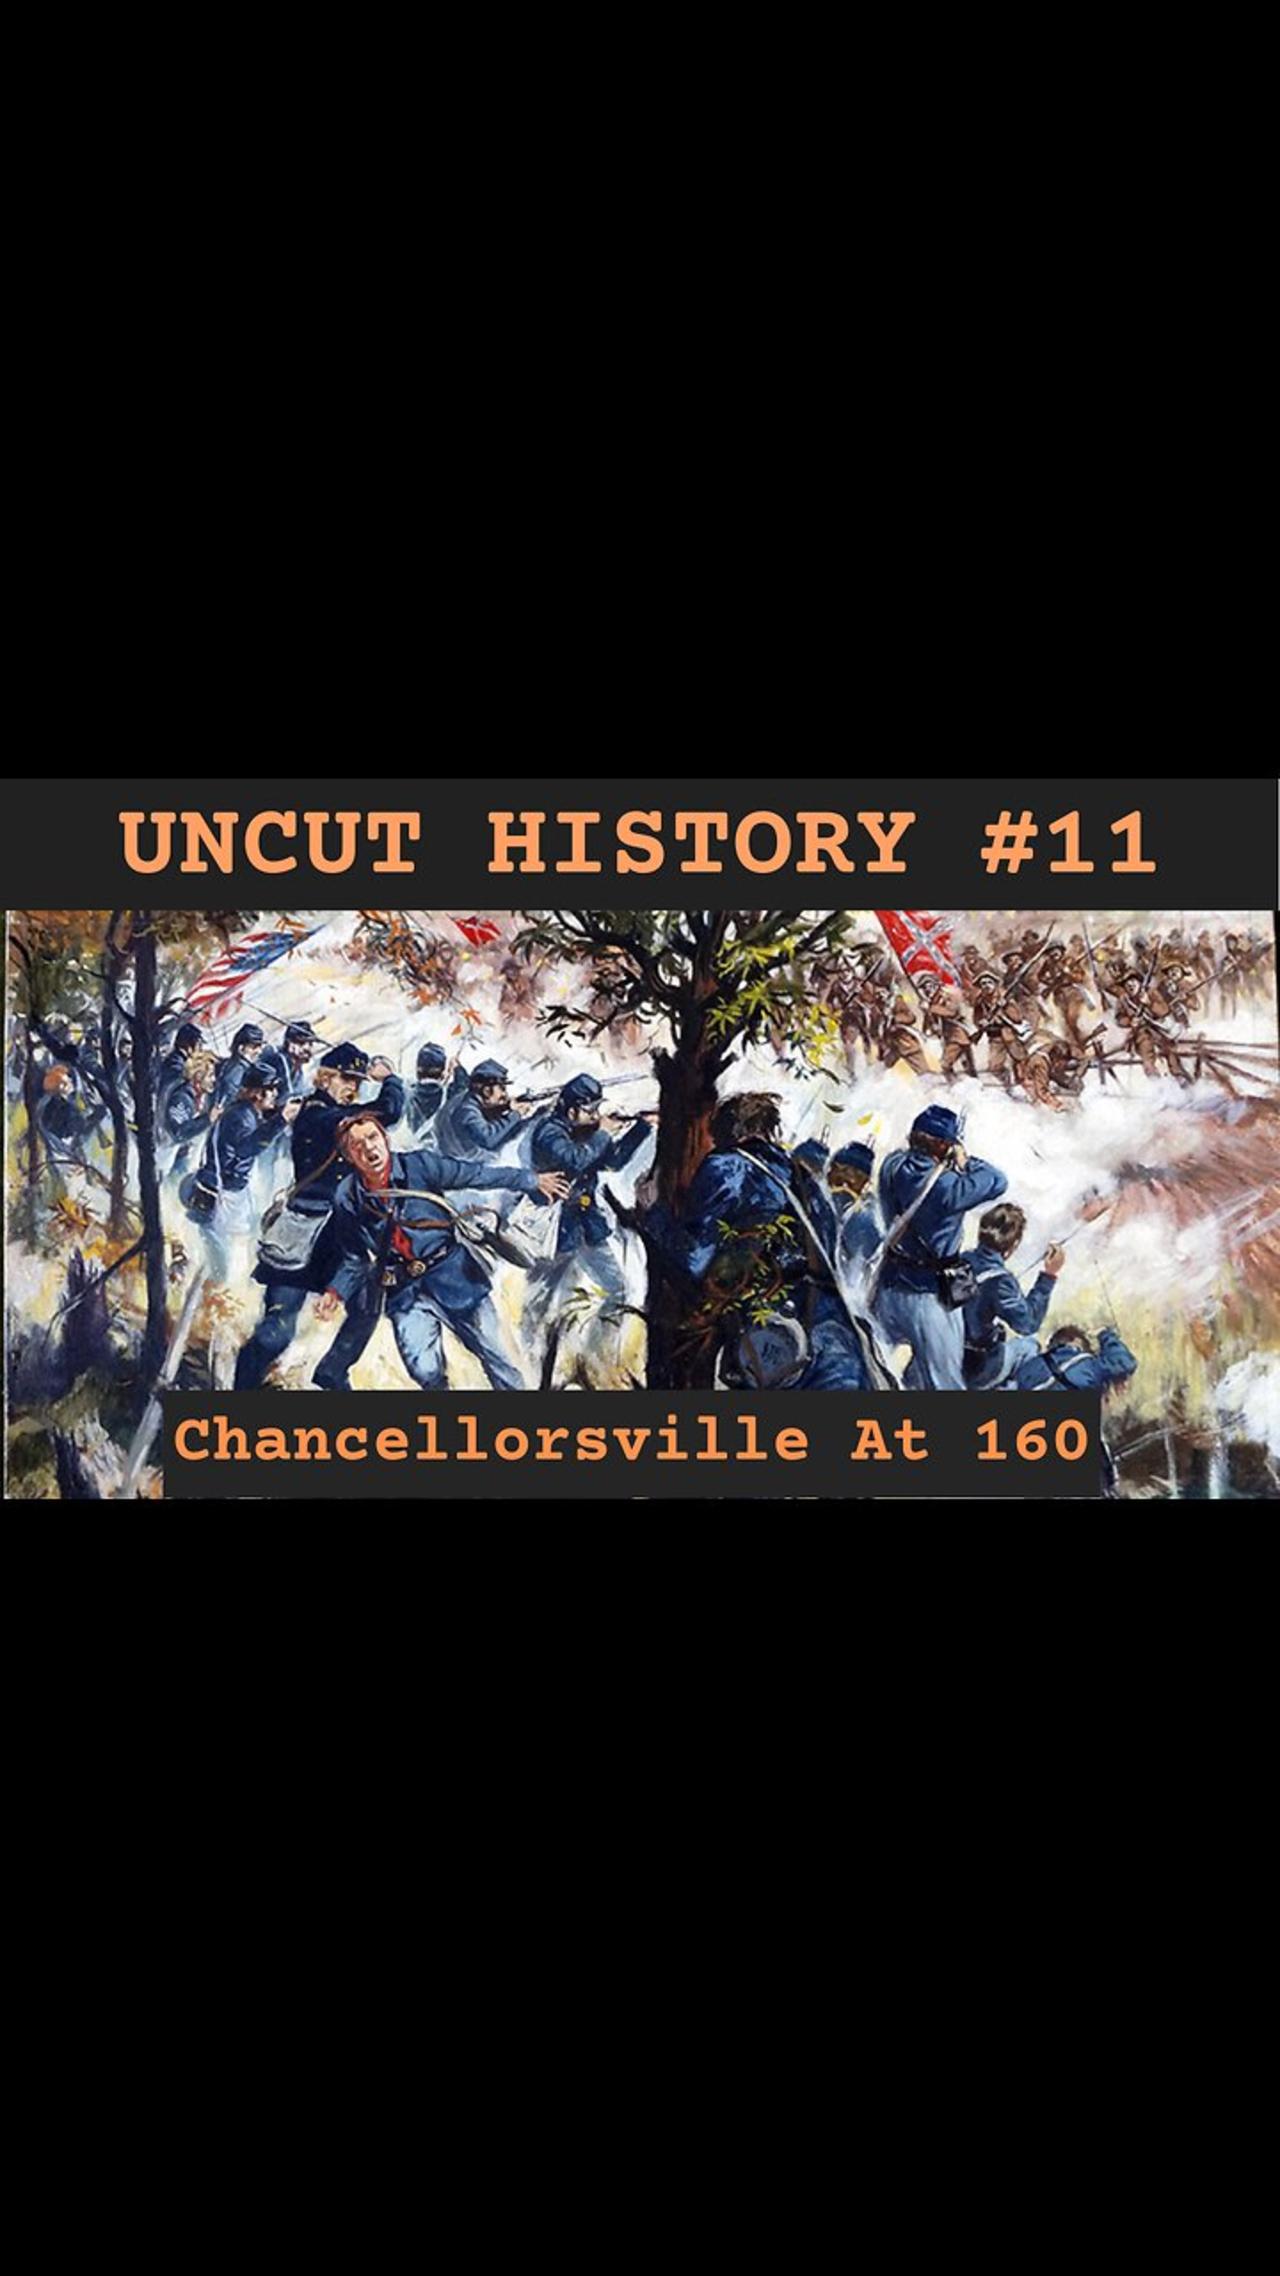 Chancellorsville At 160! - Uncut History #11